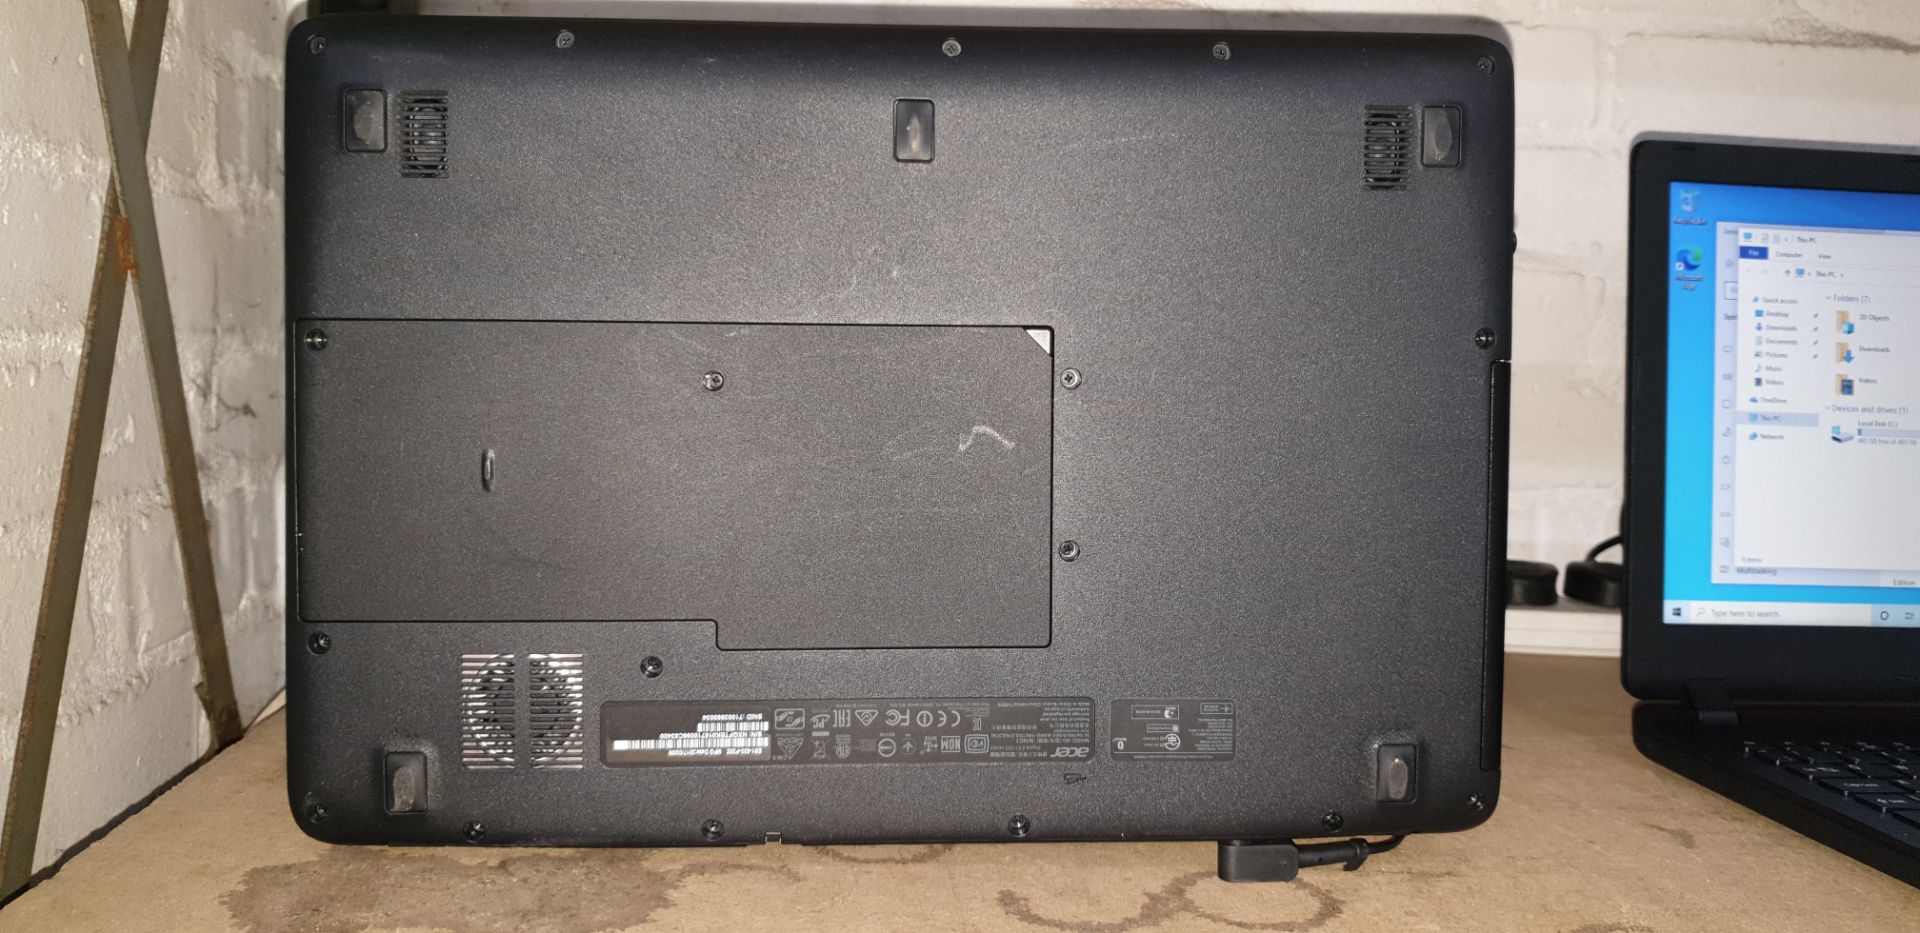 Acer notebook Acer Aspire ES1-533 15.6" Laptop Intel Pentium N4200, 1.1GHz / 2.5GHz Turbo Quad Core - Image 4 of 10